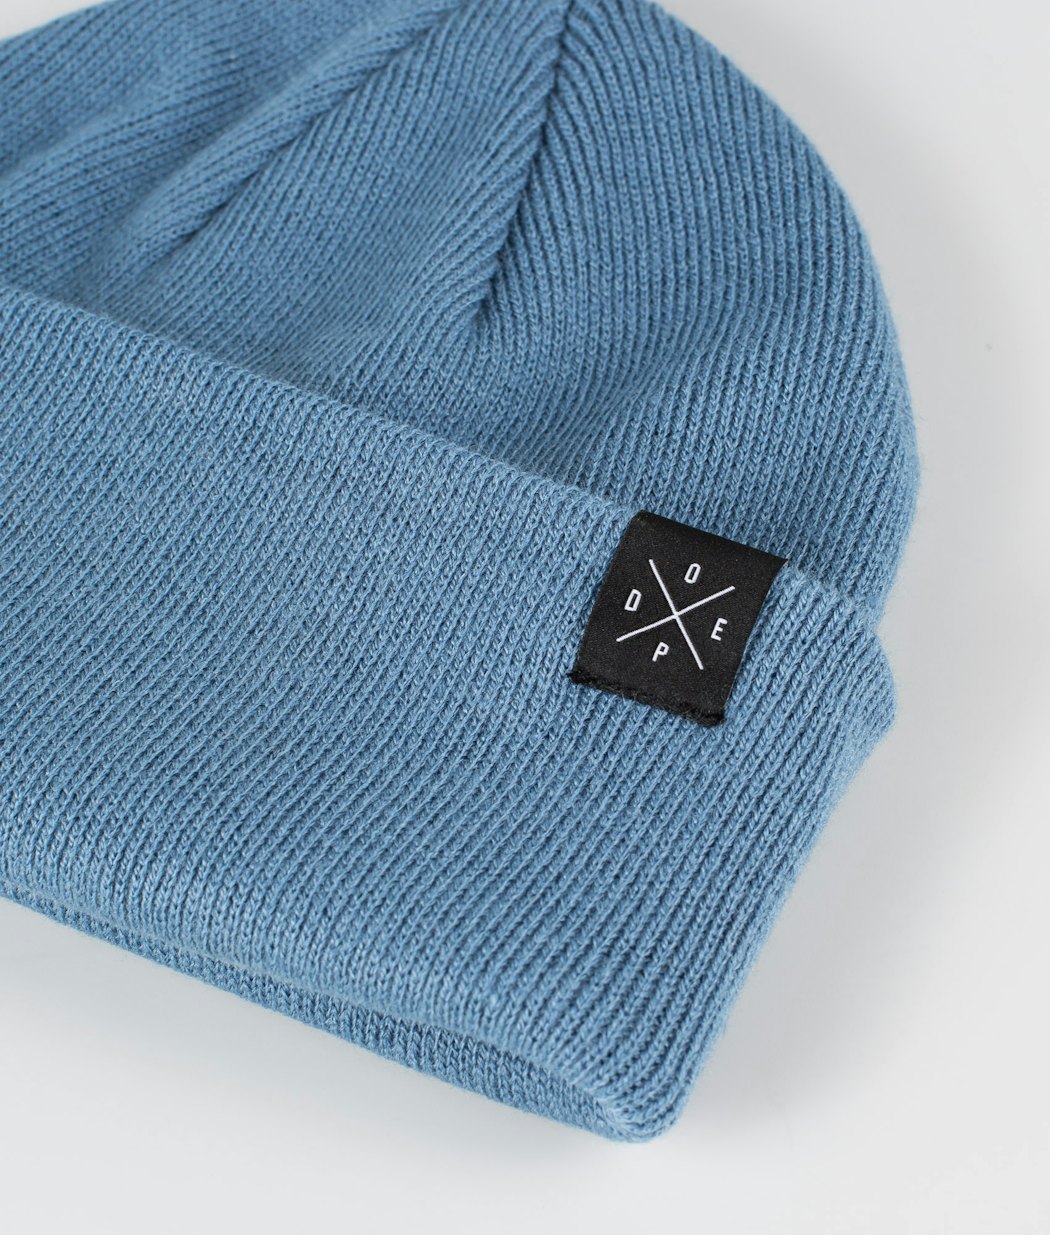 Dope Solitude ビーニー帽 メンズ Blue Steel - 青い | Dopesnow.com